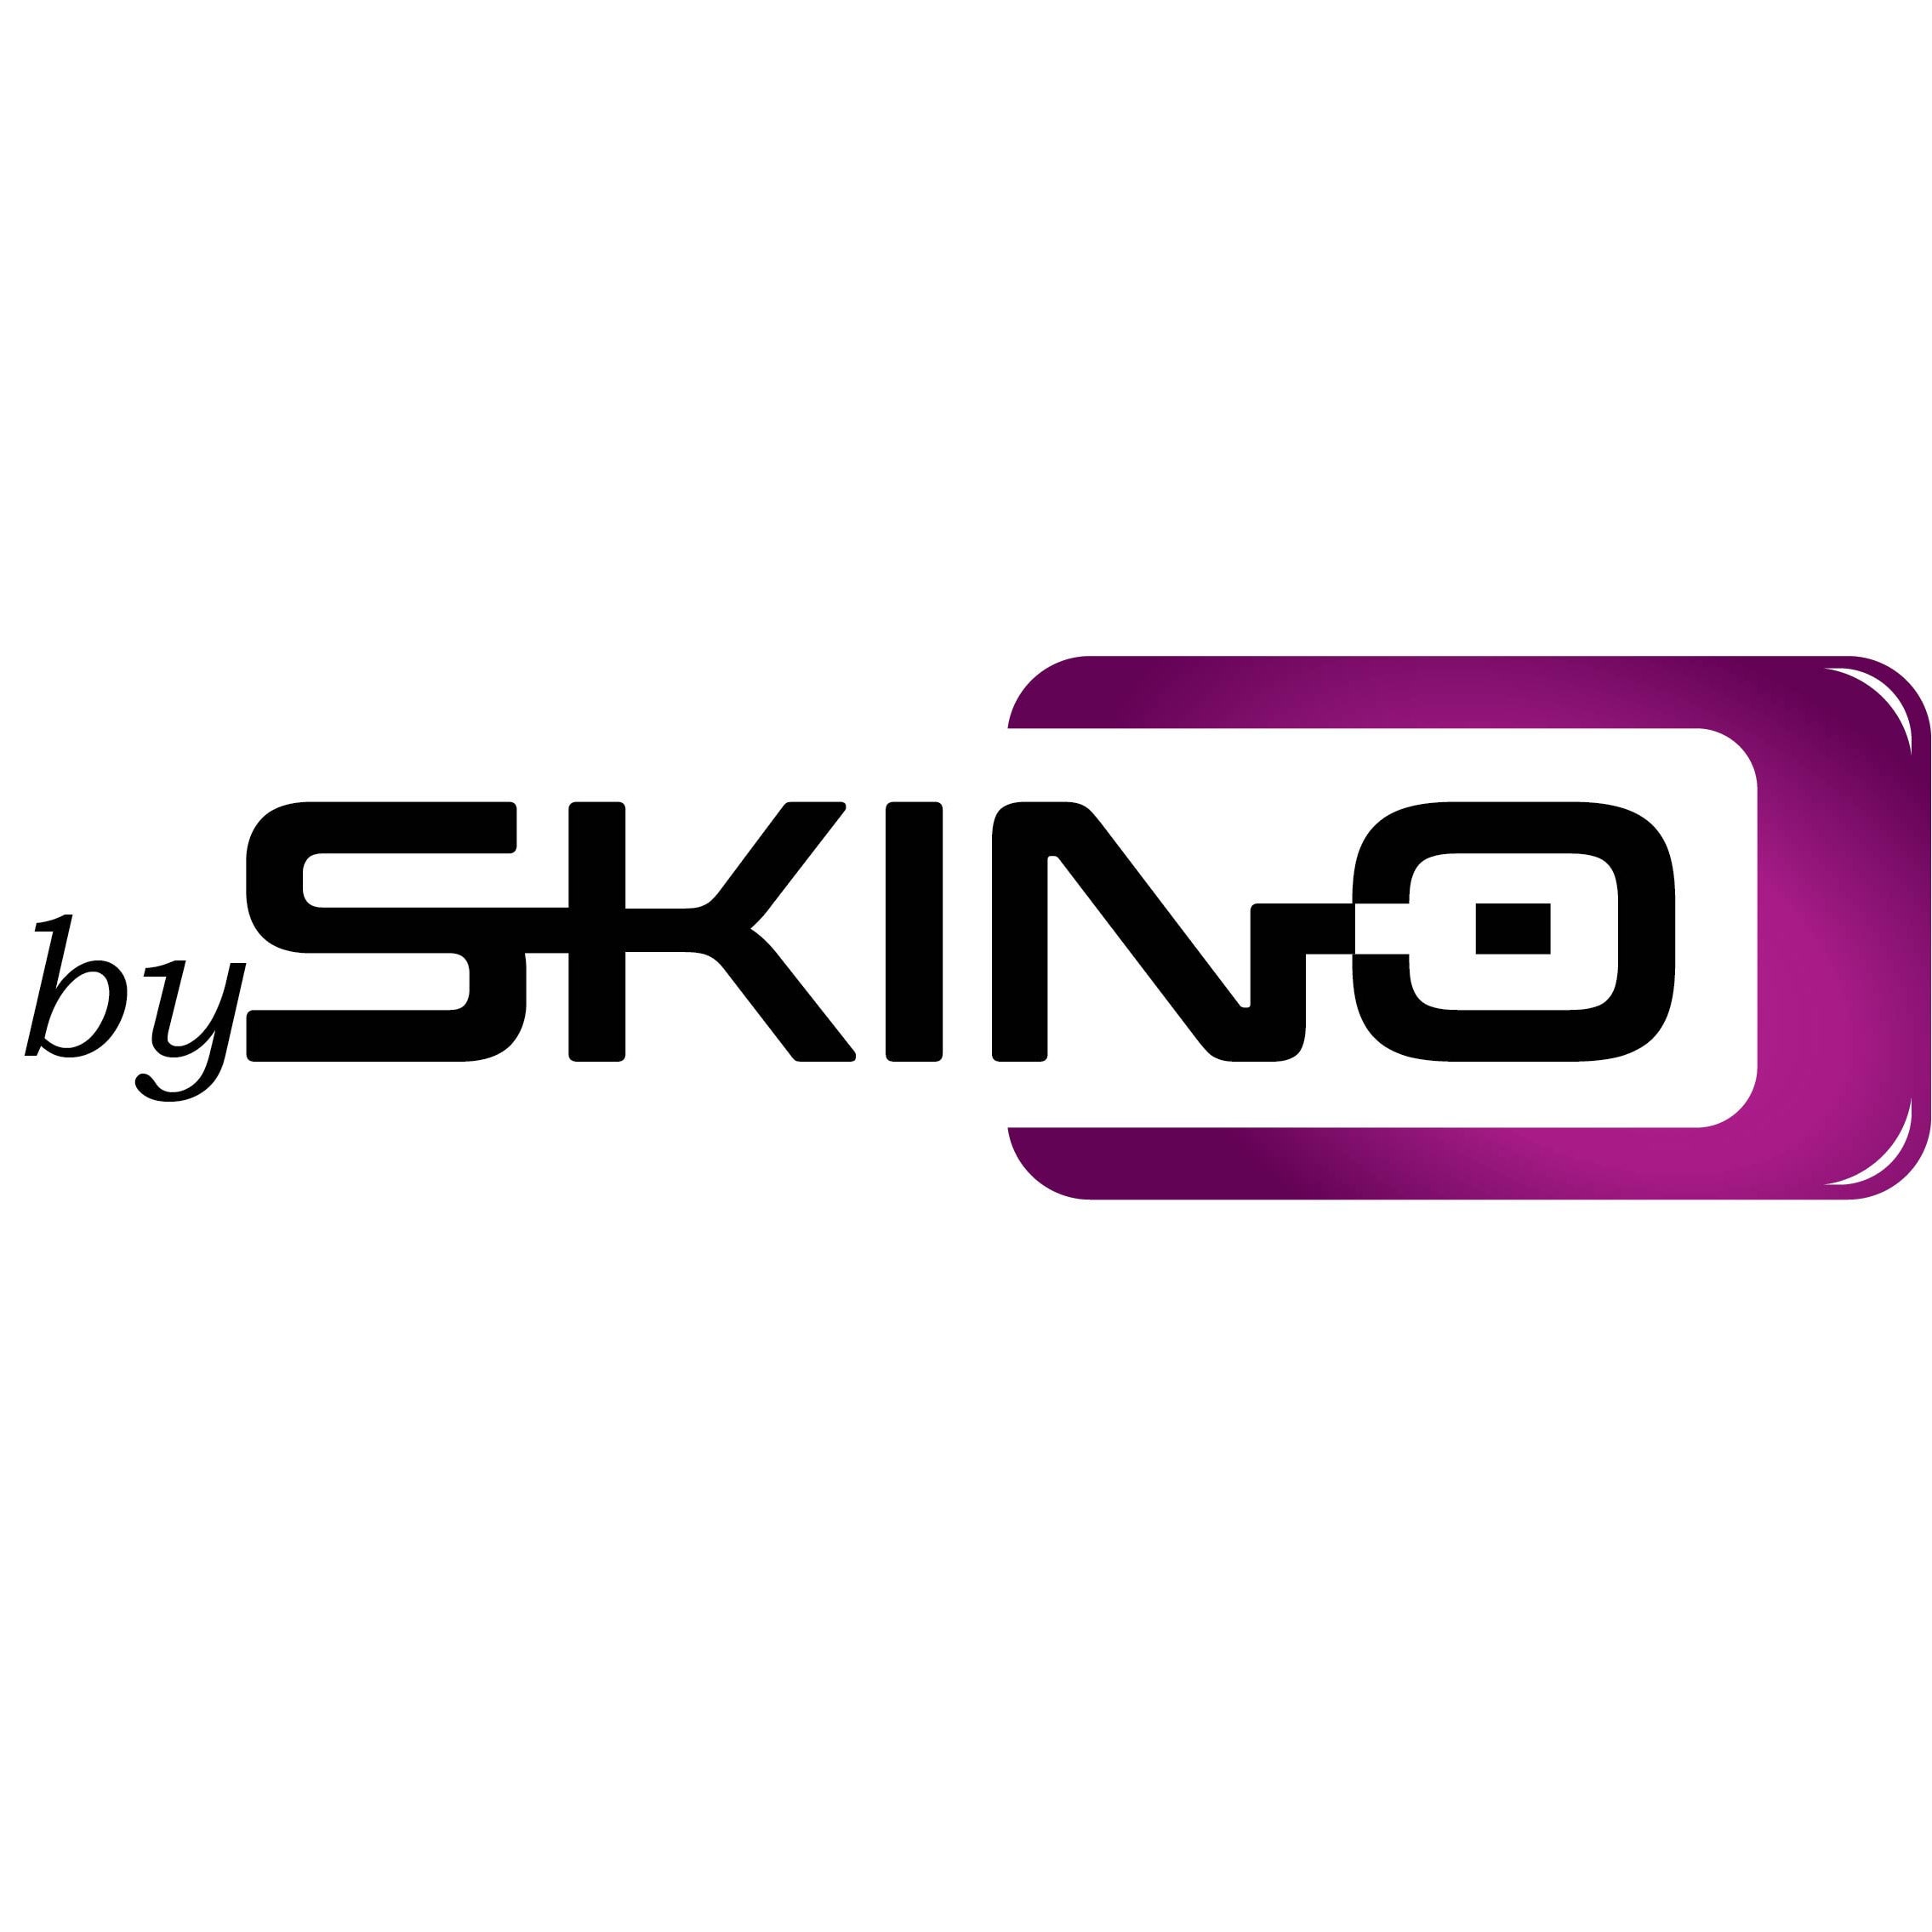  SkinoEu® 4 x 60mm ABS Plastique 3D Gel Silicone Cache